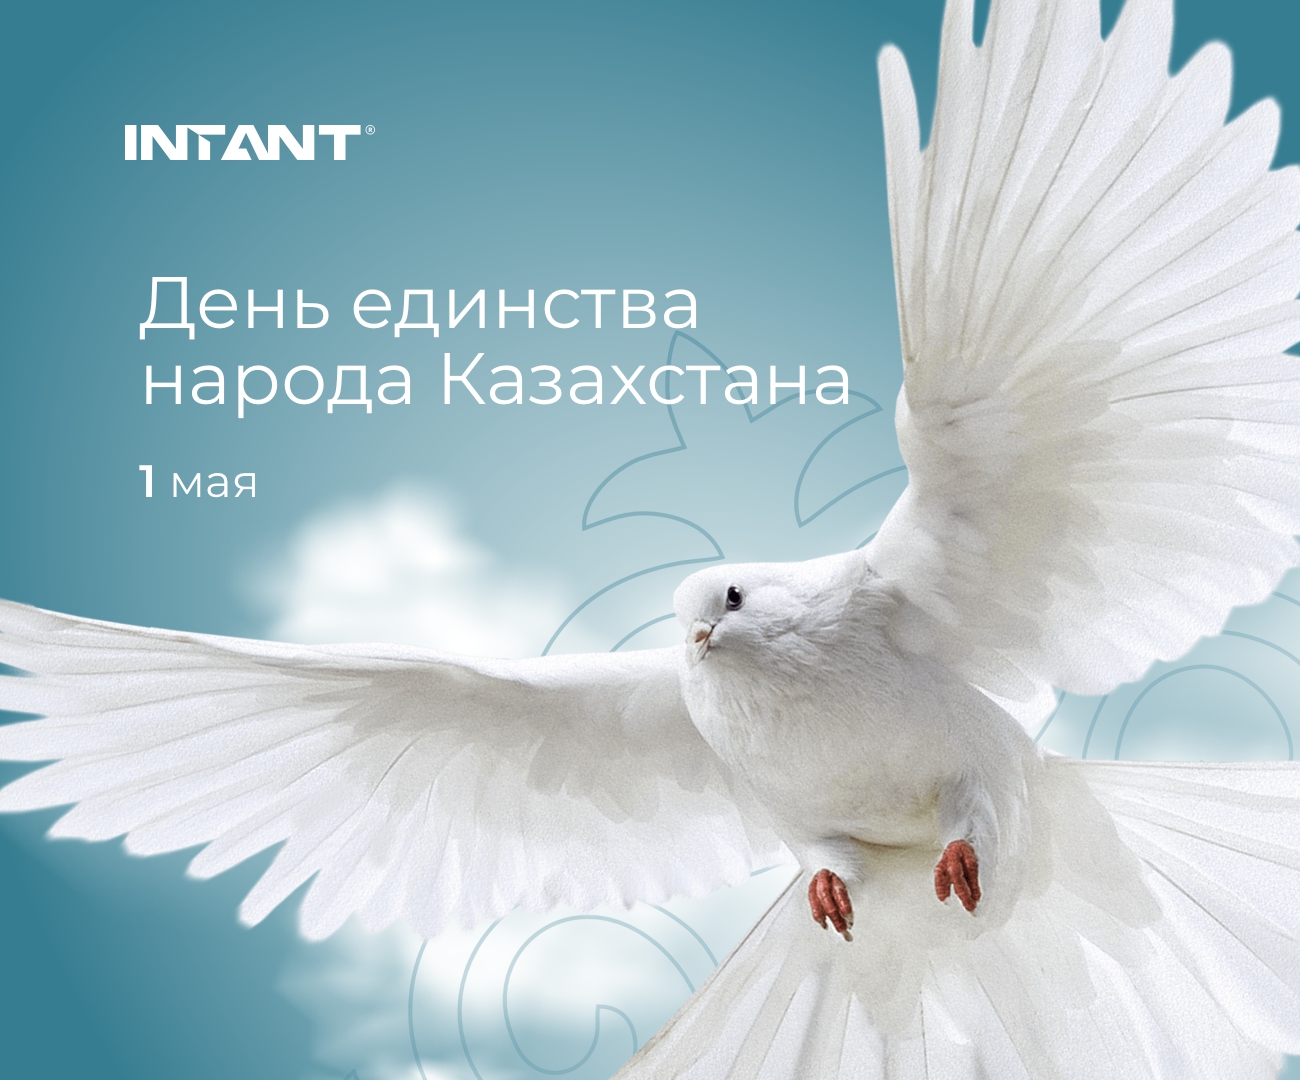 С Днём Единства народа Казахстана!<